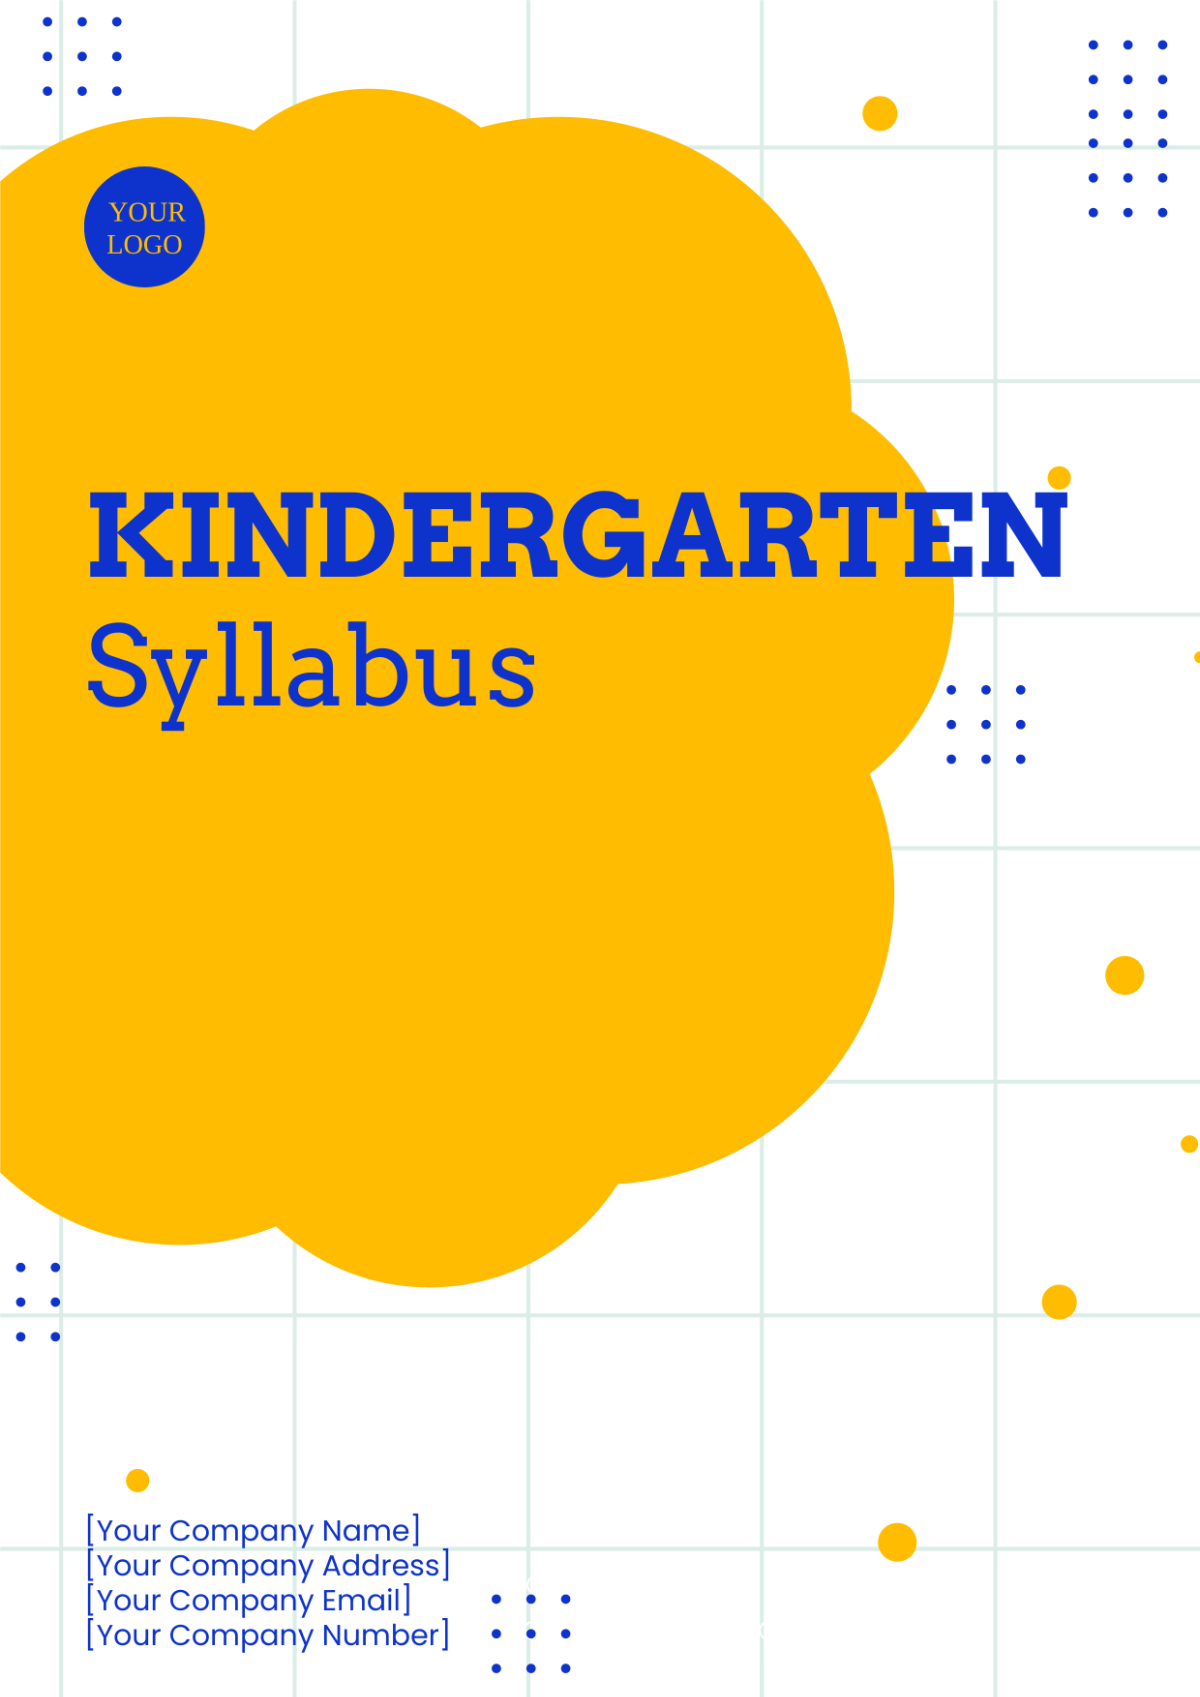 Kindergarten Syllabus Cover Page